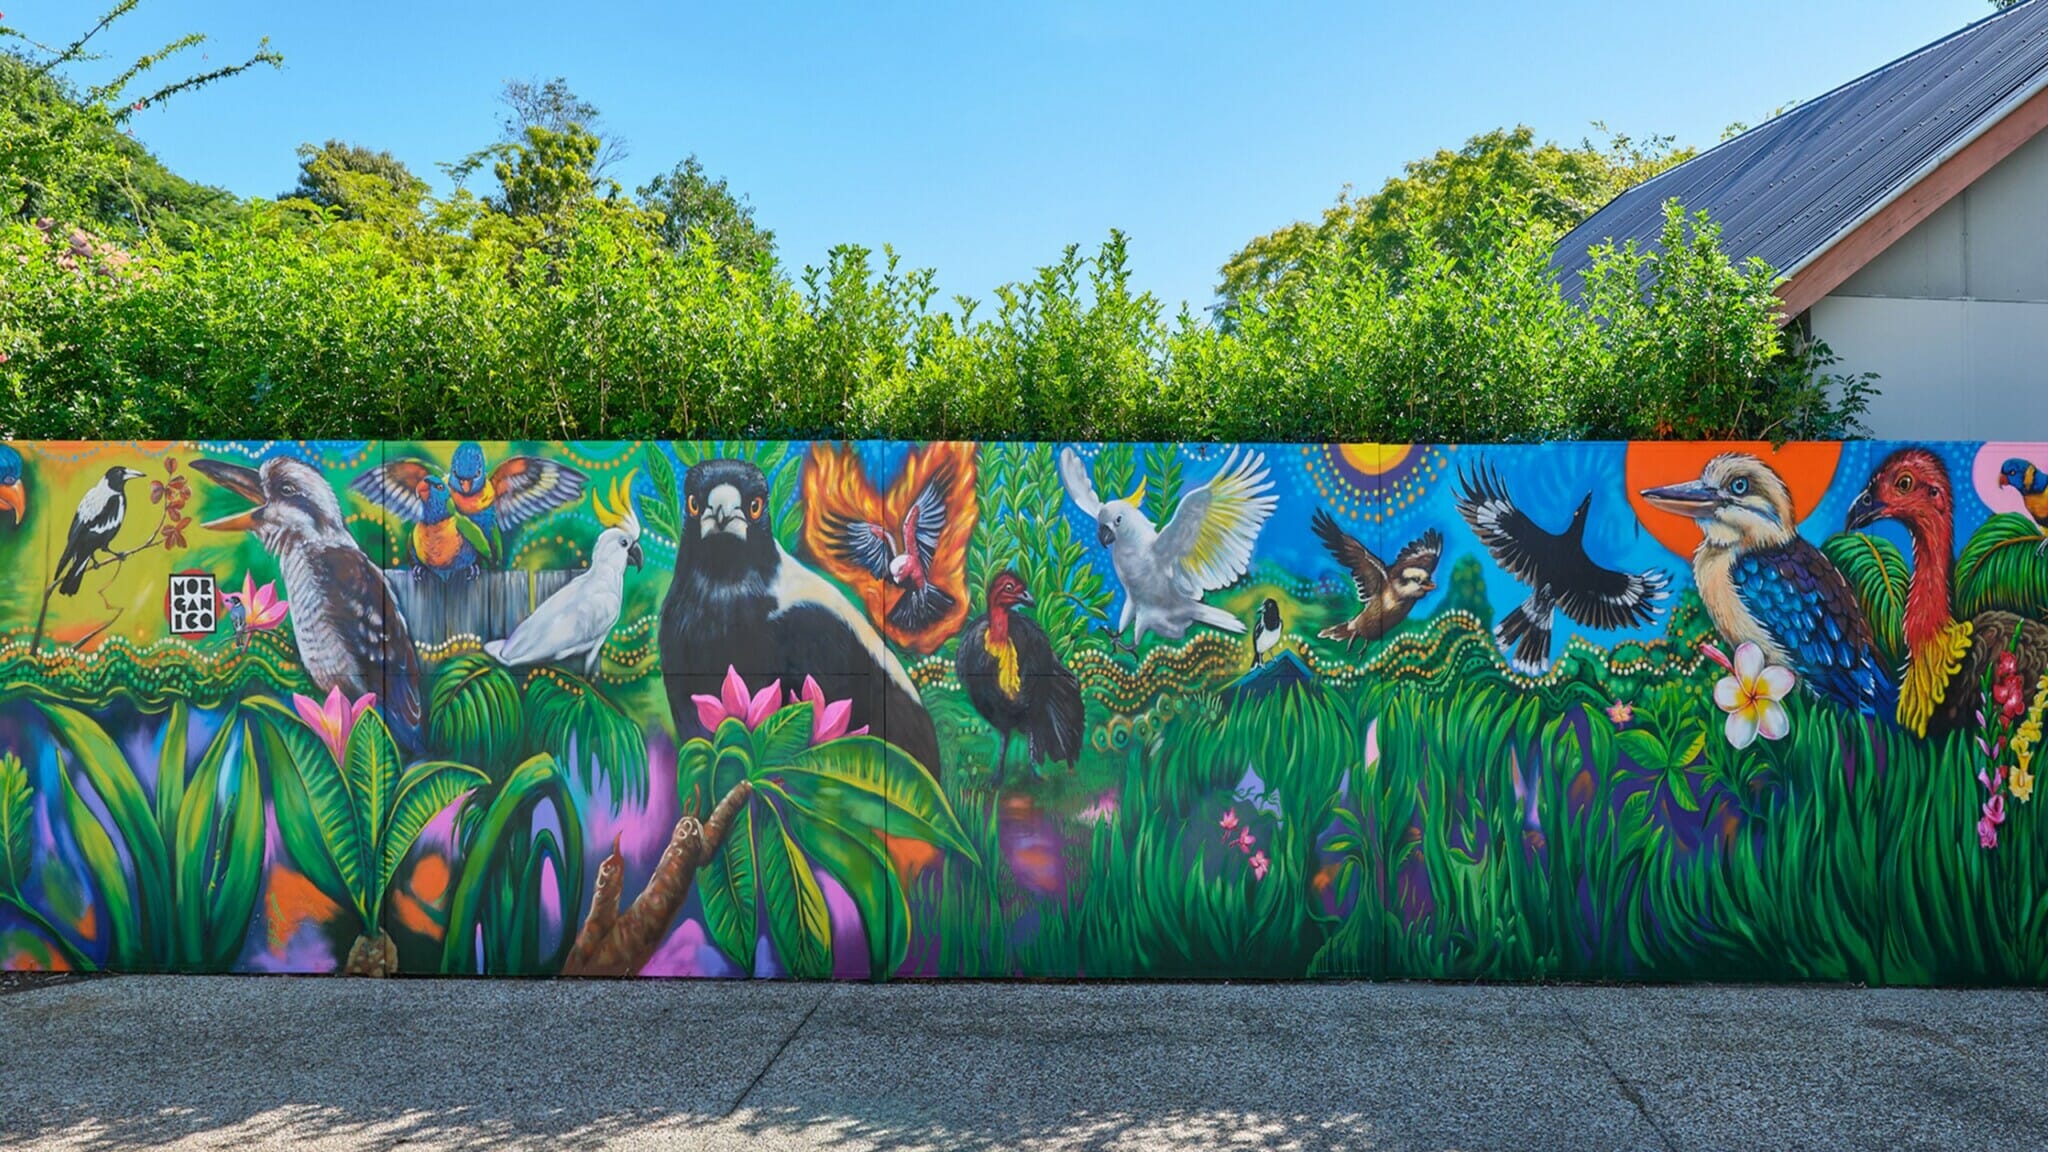 Incredible Wall Mural Brings Colour To Suburbs | ModularWalls